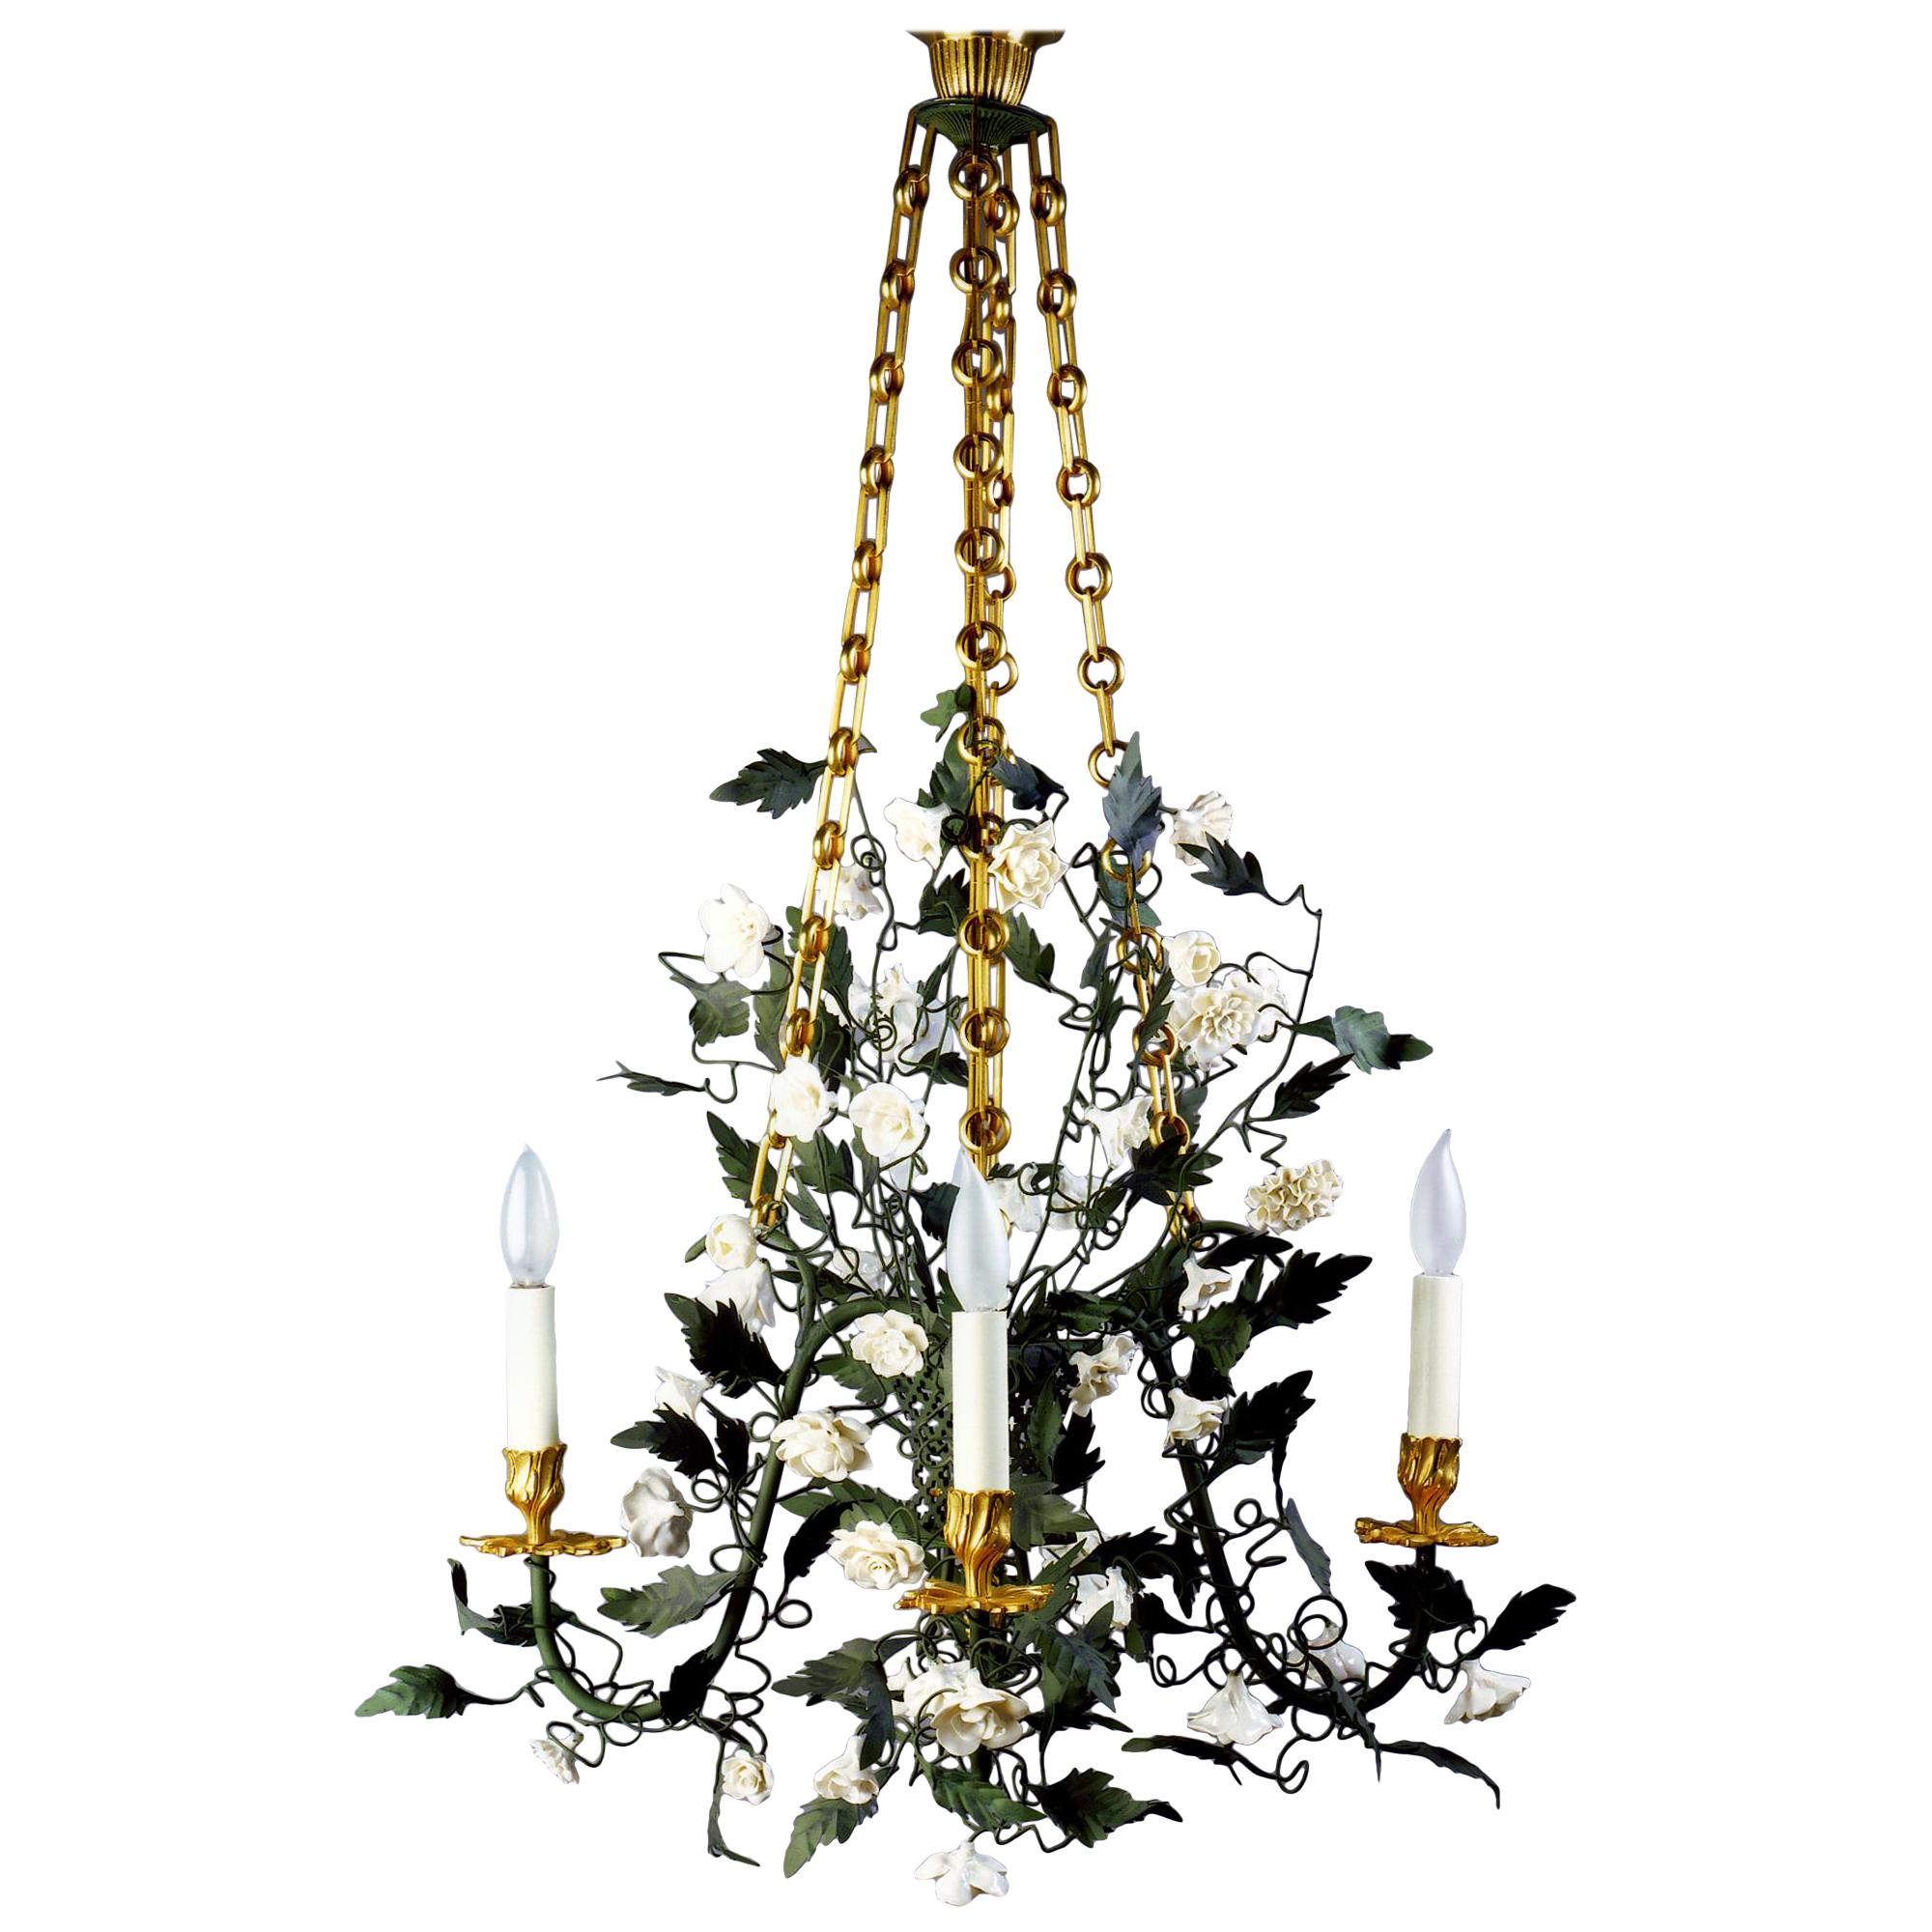 24-Karat Gilded Bronze with Porcelain Flowers "Pompadour" Chandelier For Sale